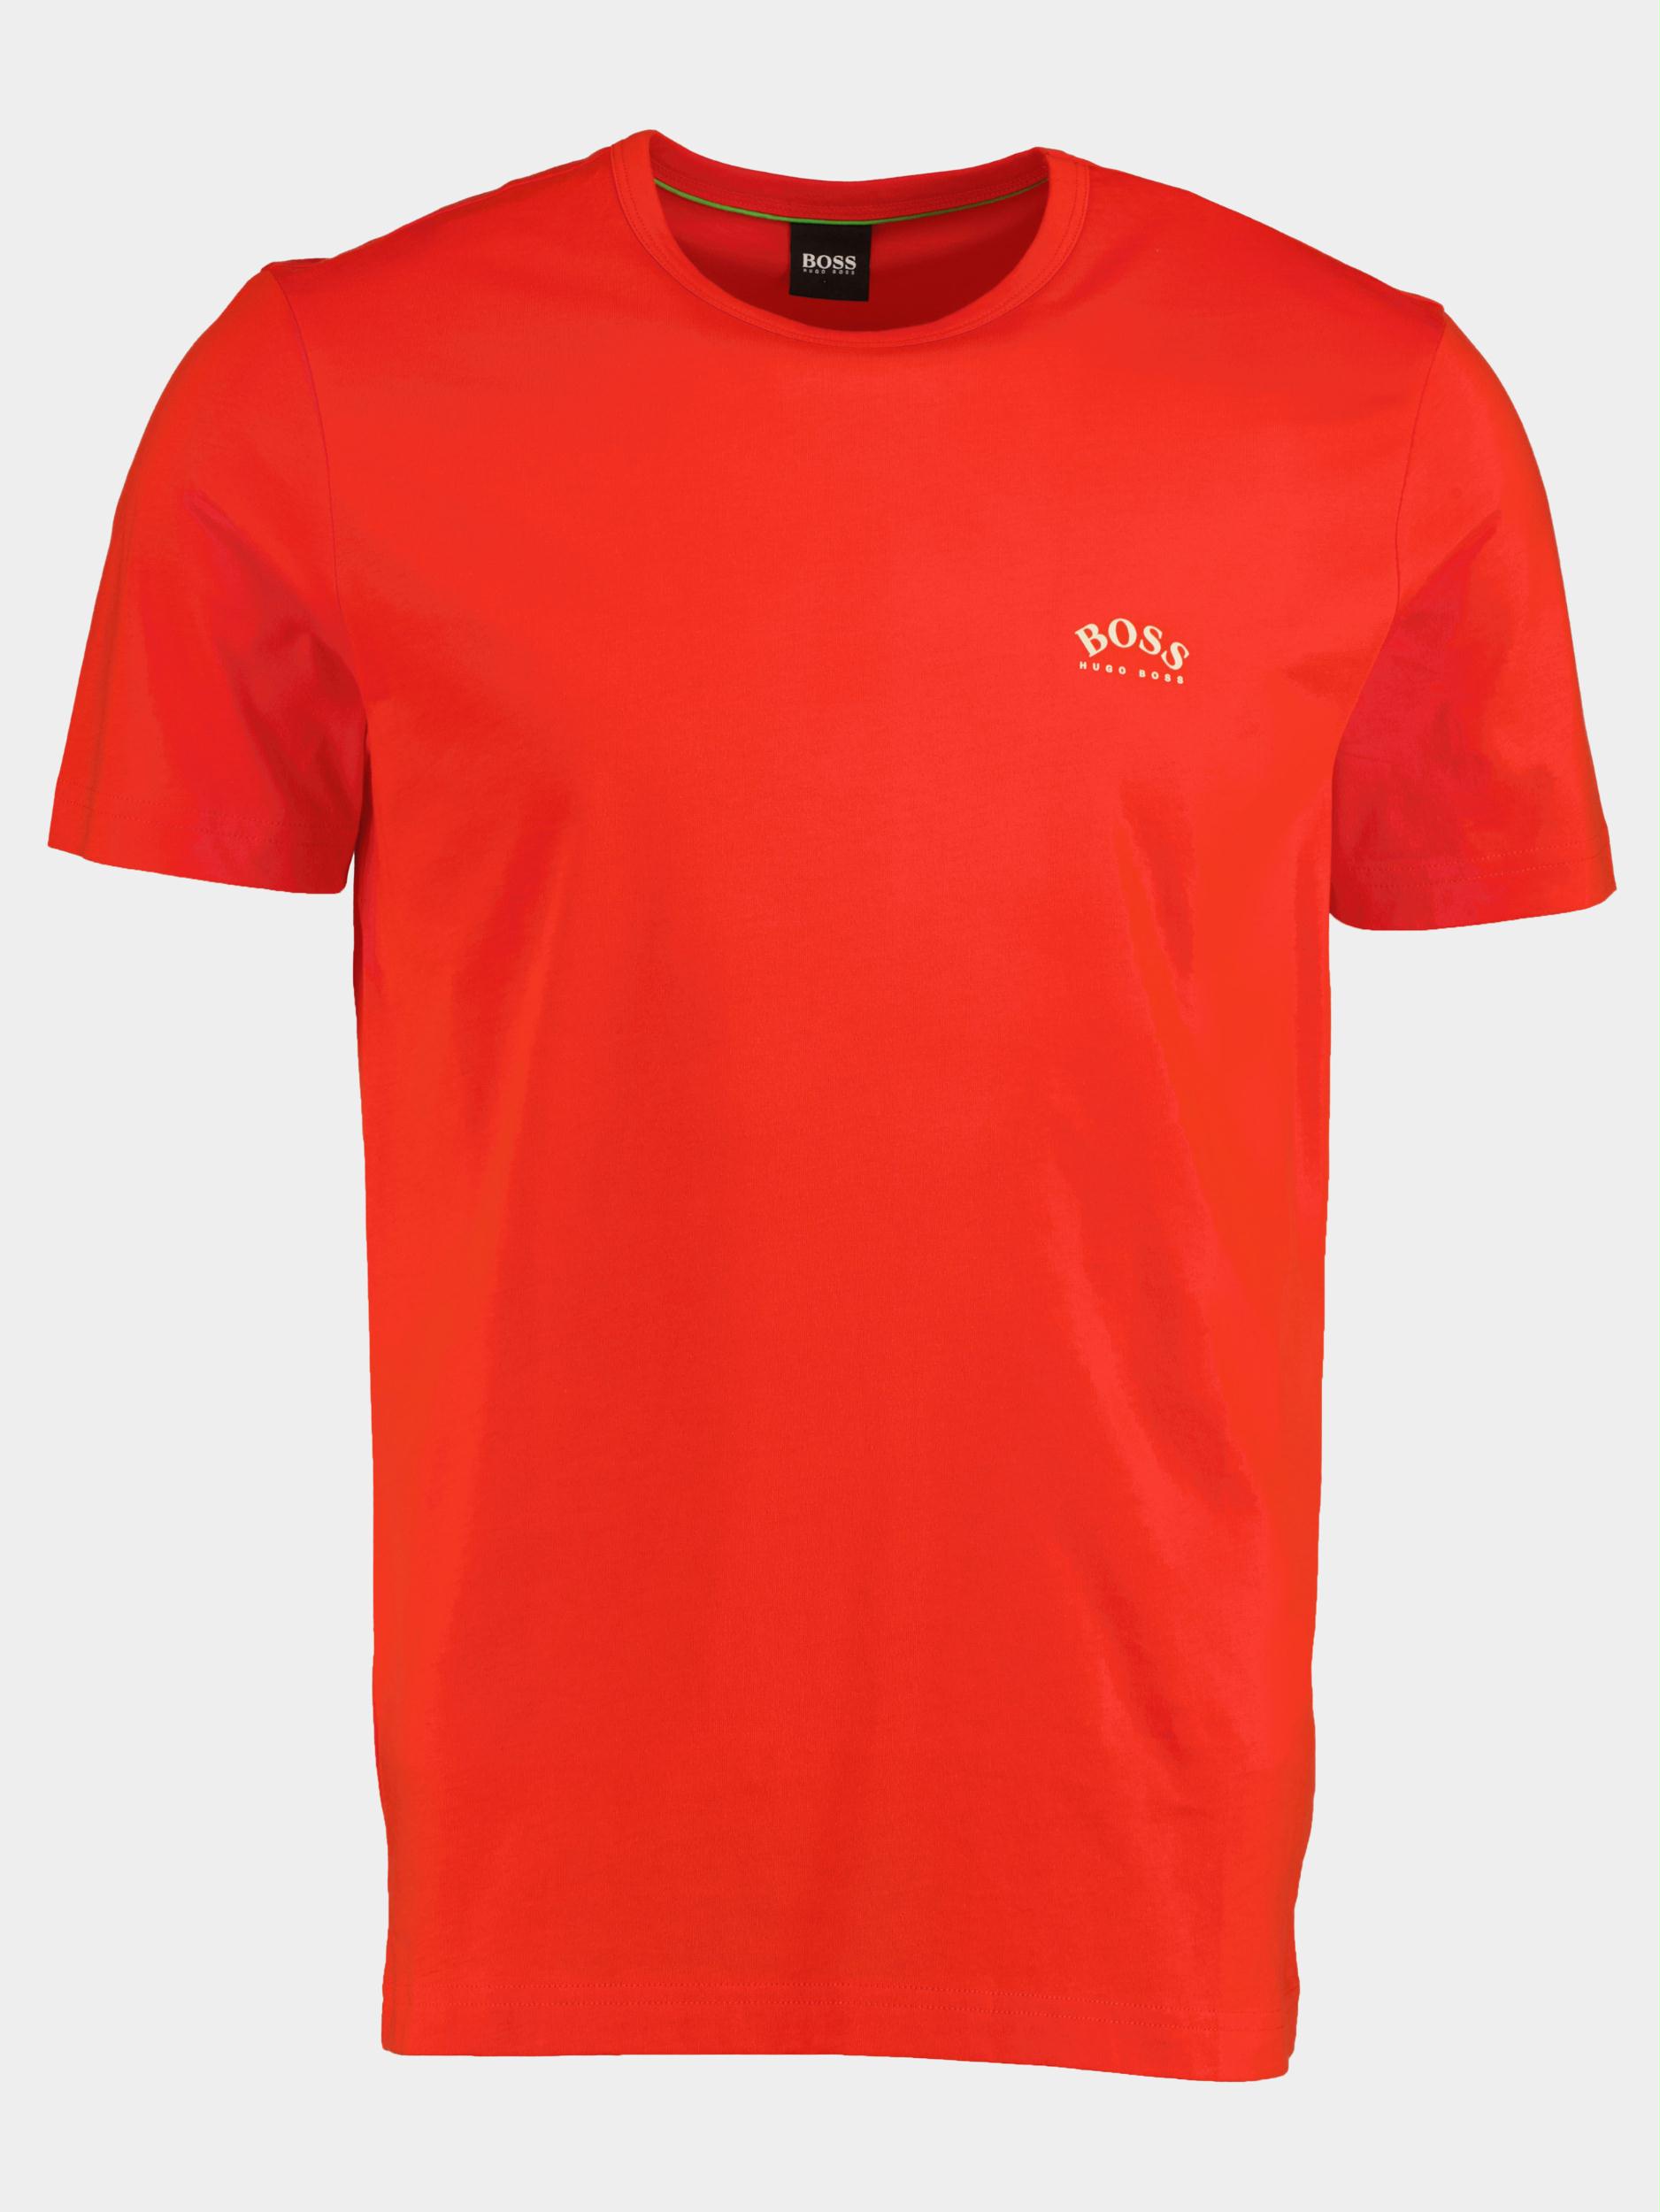 BOSS Green T-shirt korte mouw Oranje Tee Curved 10213473 01 50412363/821